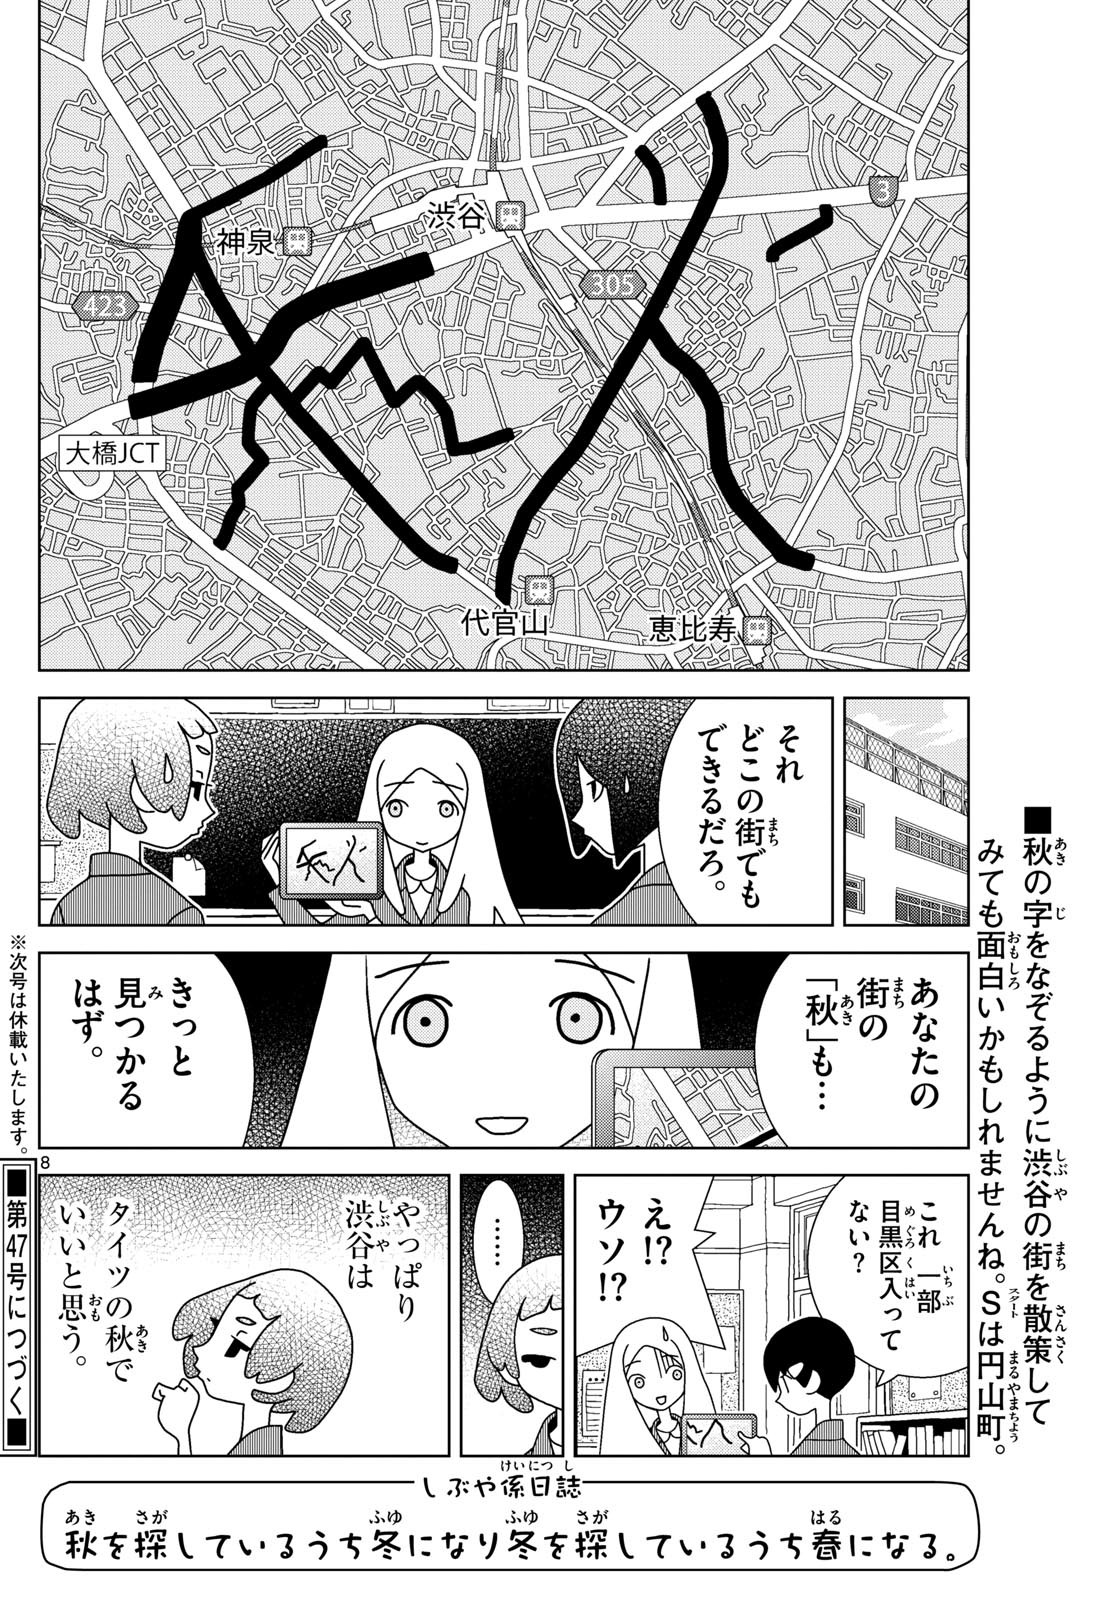 Shibuya Near Family - Chapter 074 - Page 8